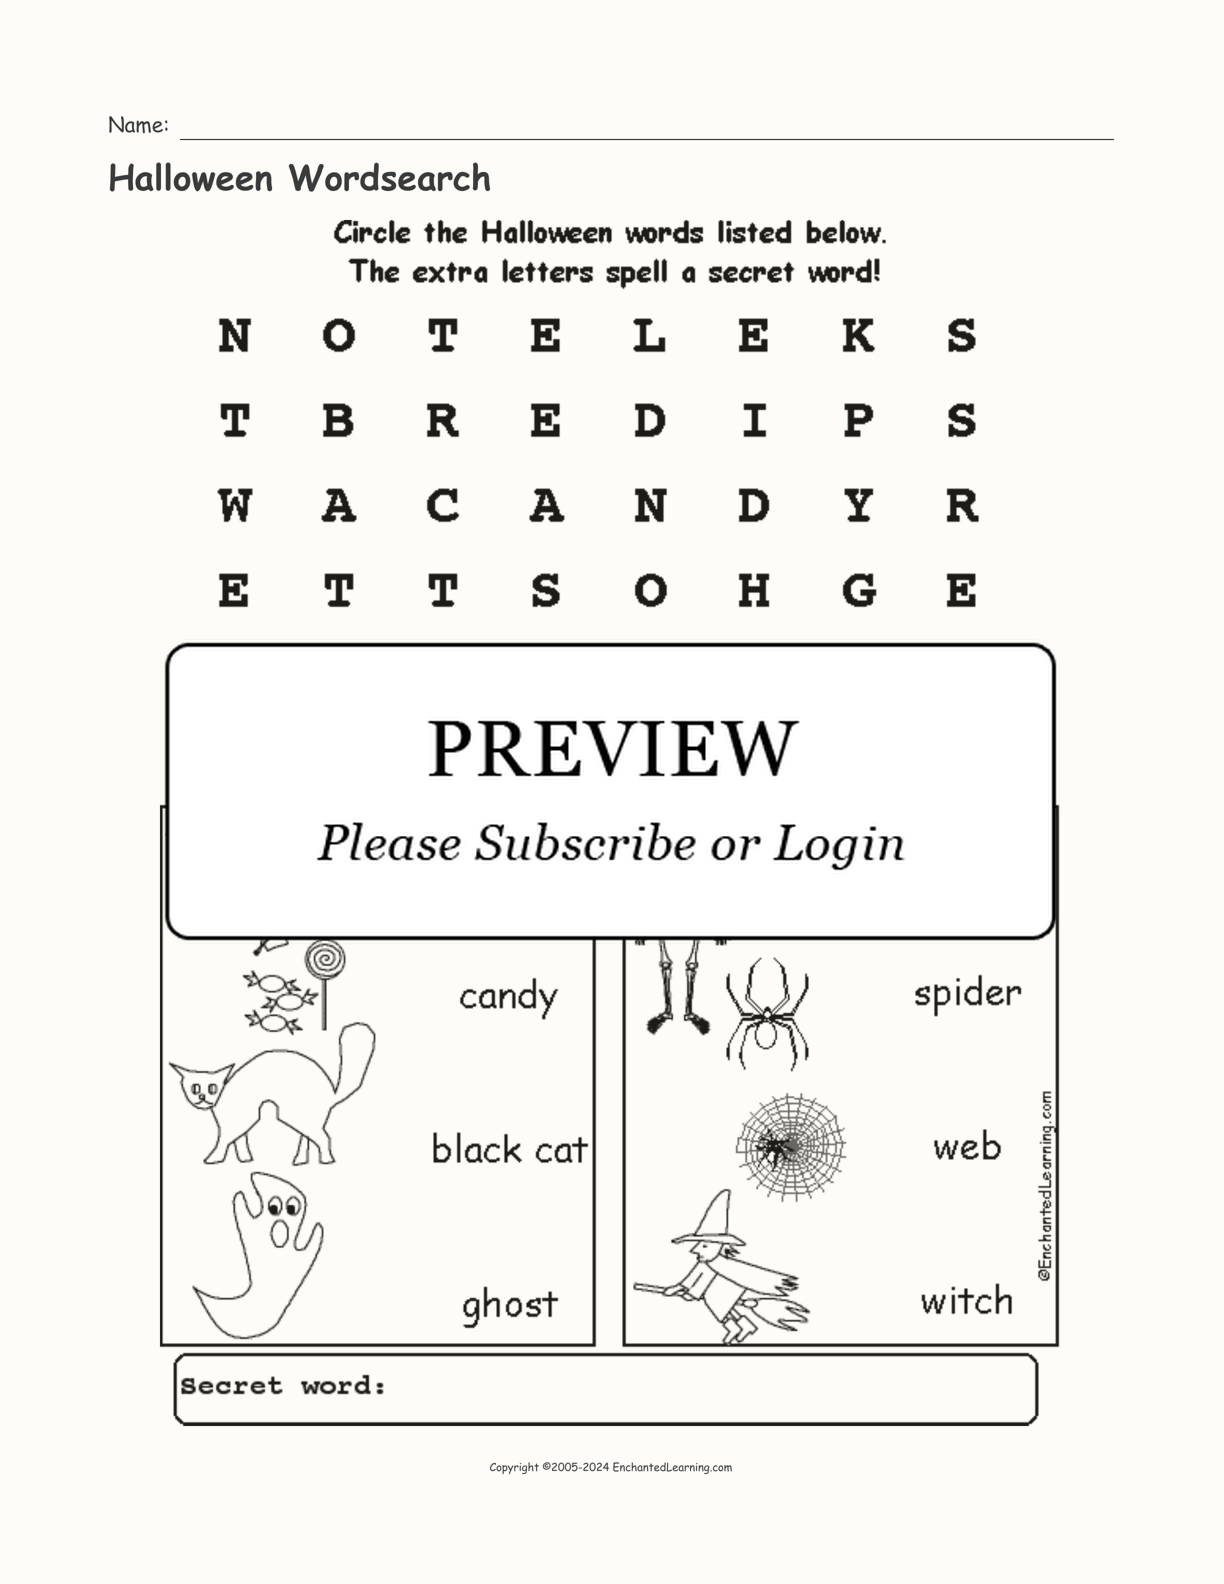 Halloween Wordsearch interactive worksheet page 1